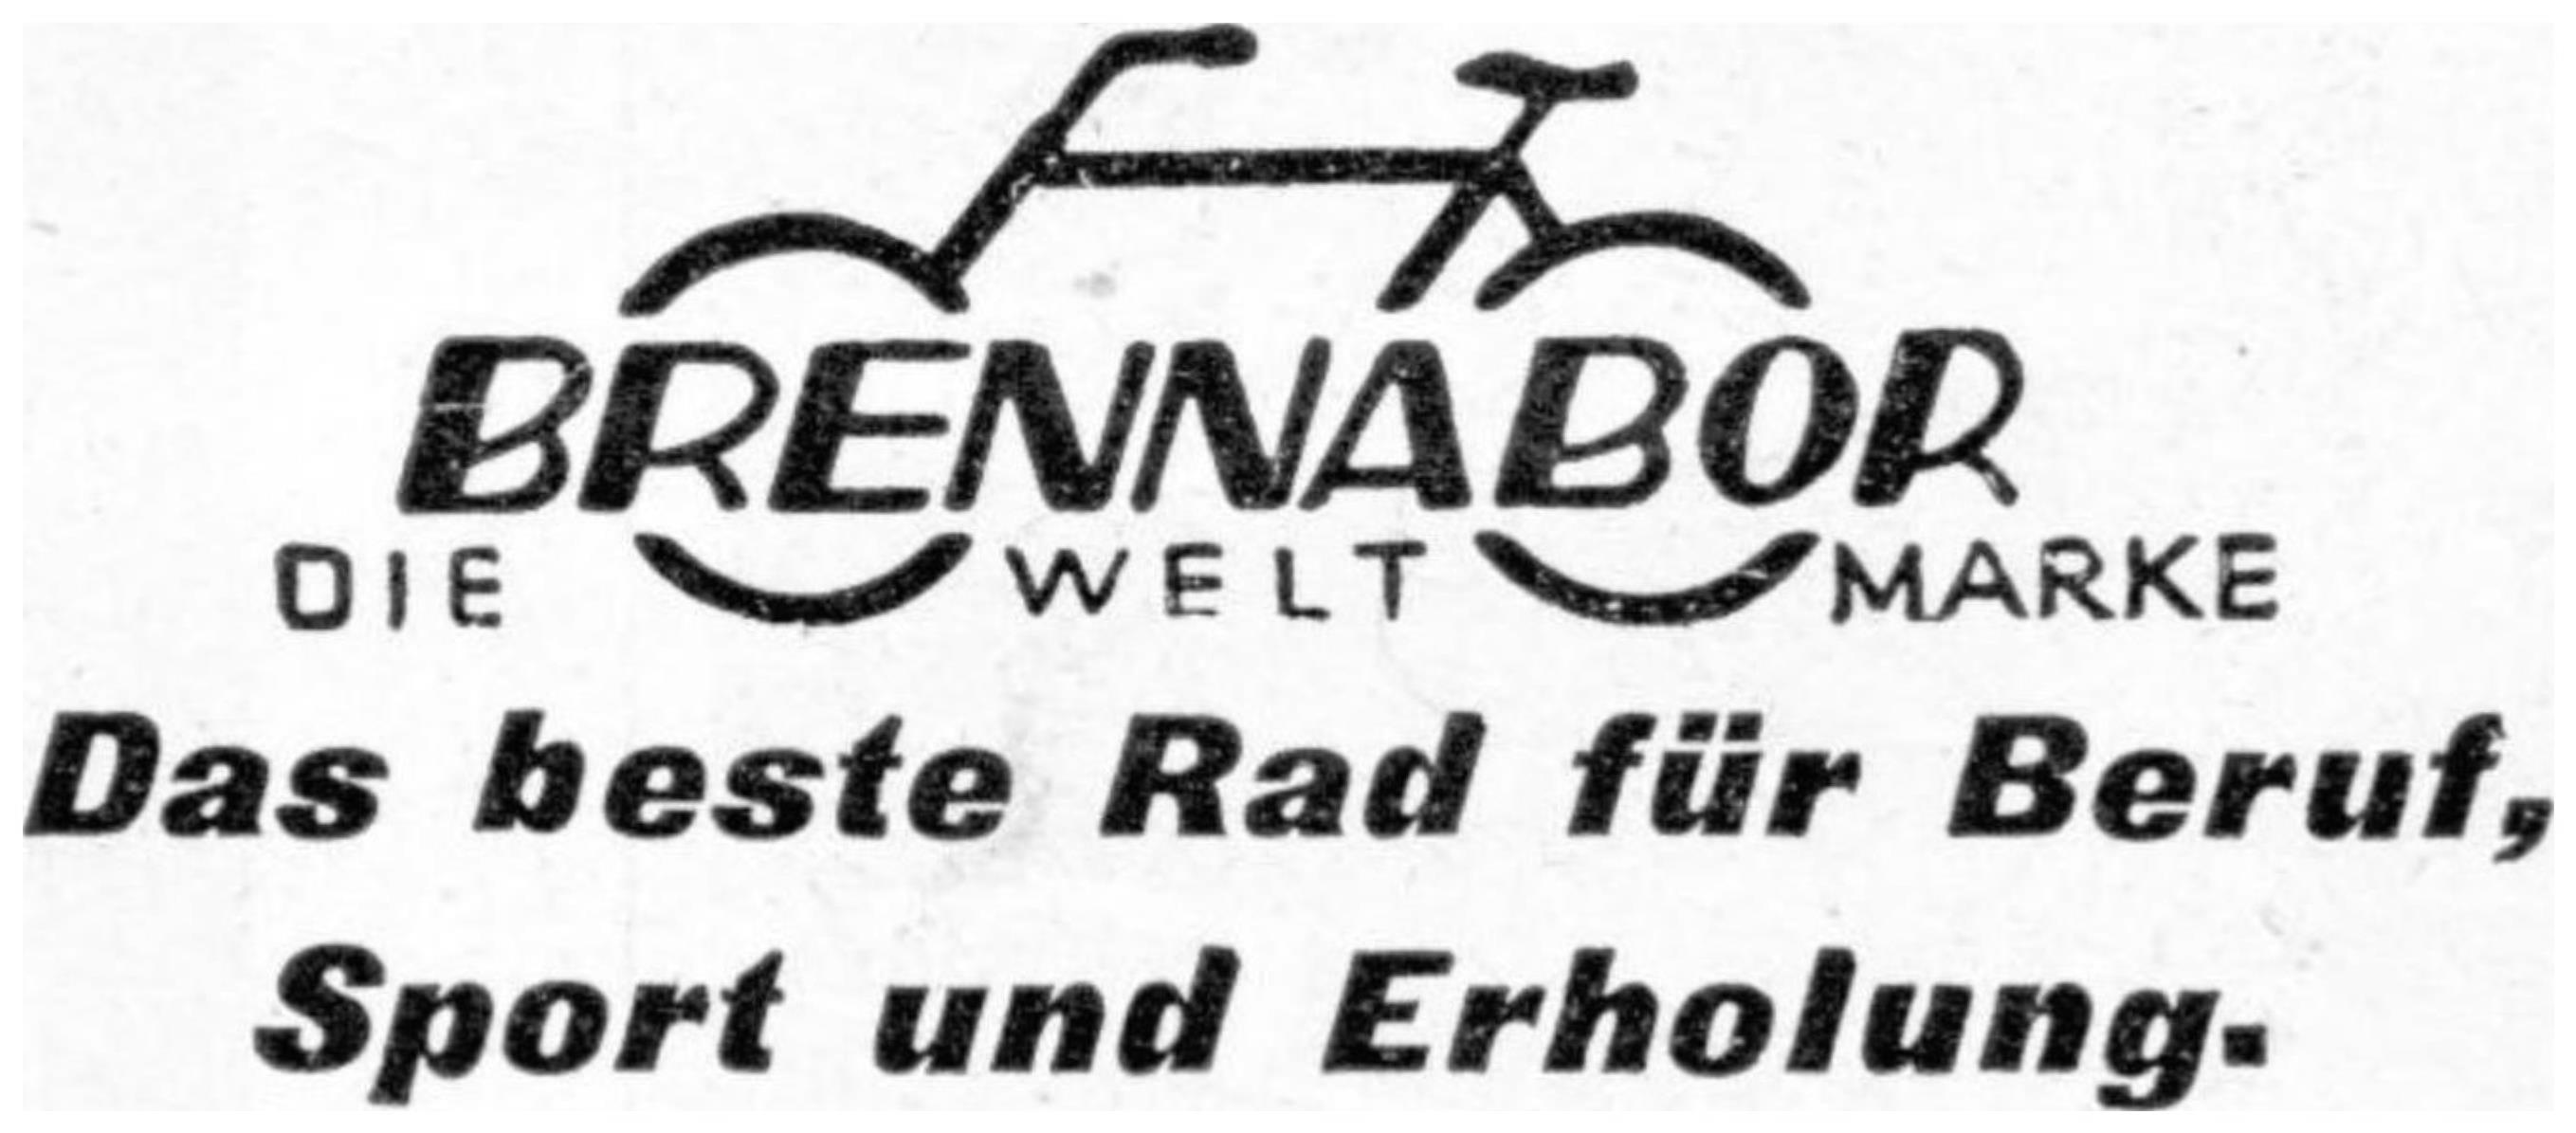 Brennabor 1934 1.jpg